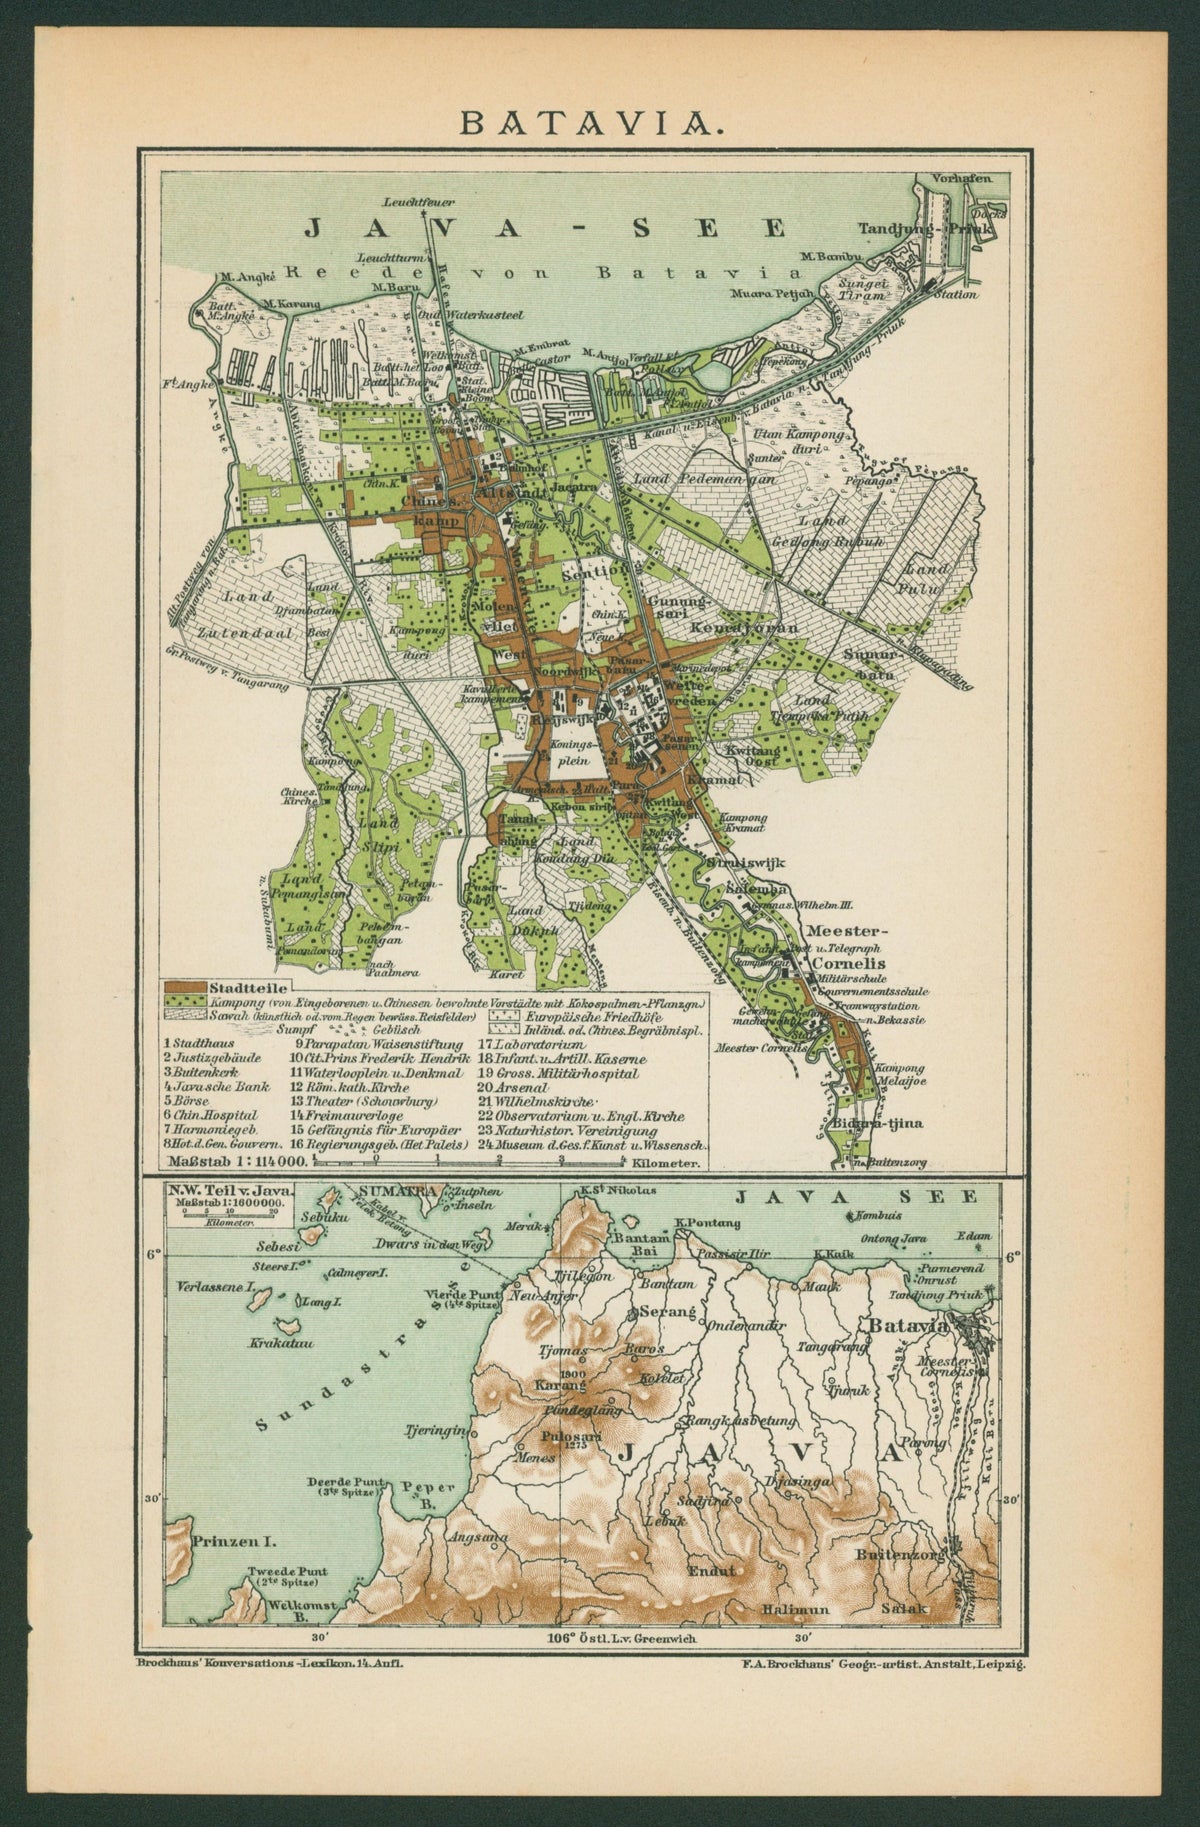 1895 BATAVIA JAKARTA CITY and SUBURBS INDONESIA Antique Map - Authentic Vintage Antique Print